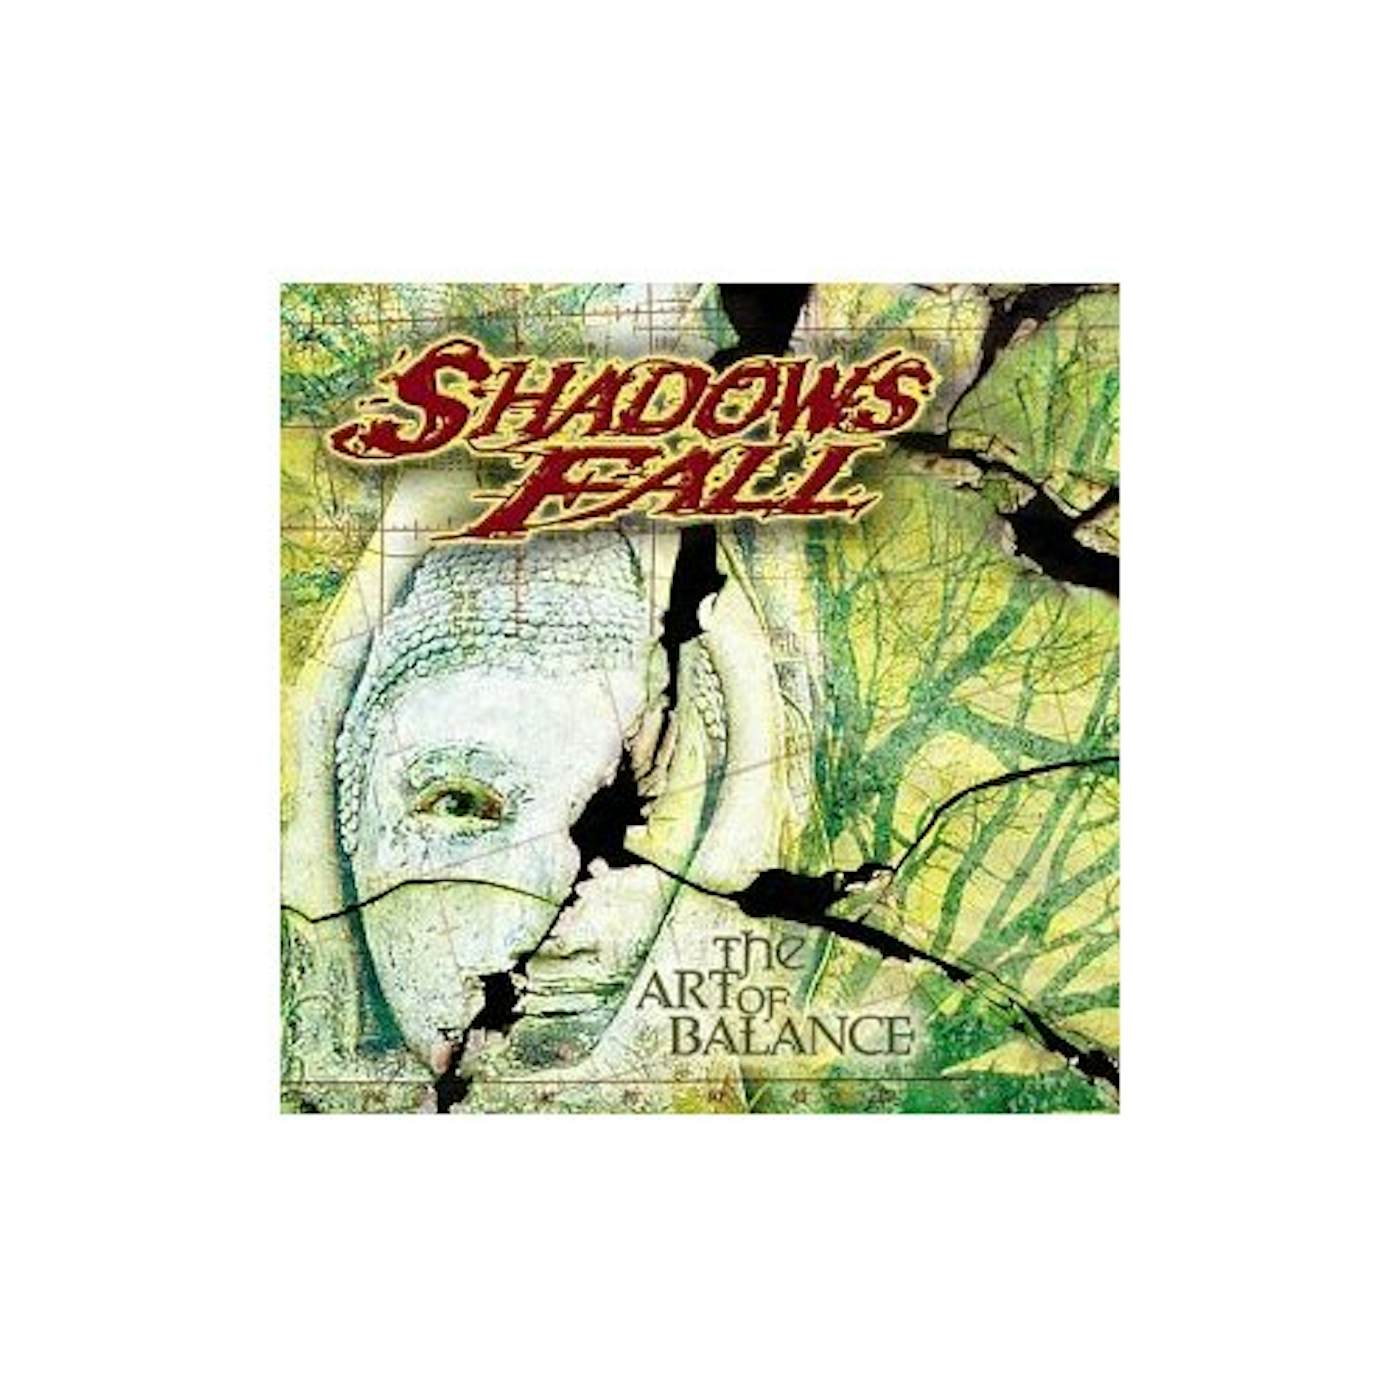 Shadows Fall ART OF BALANCE CD